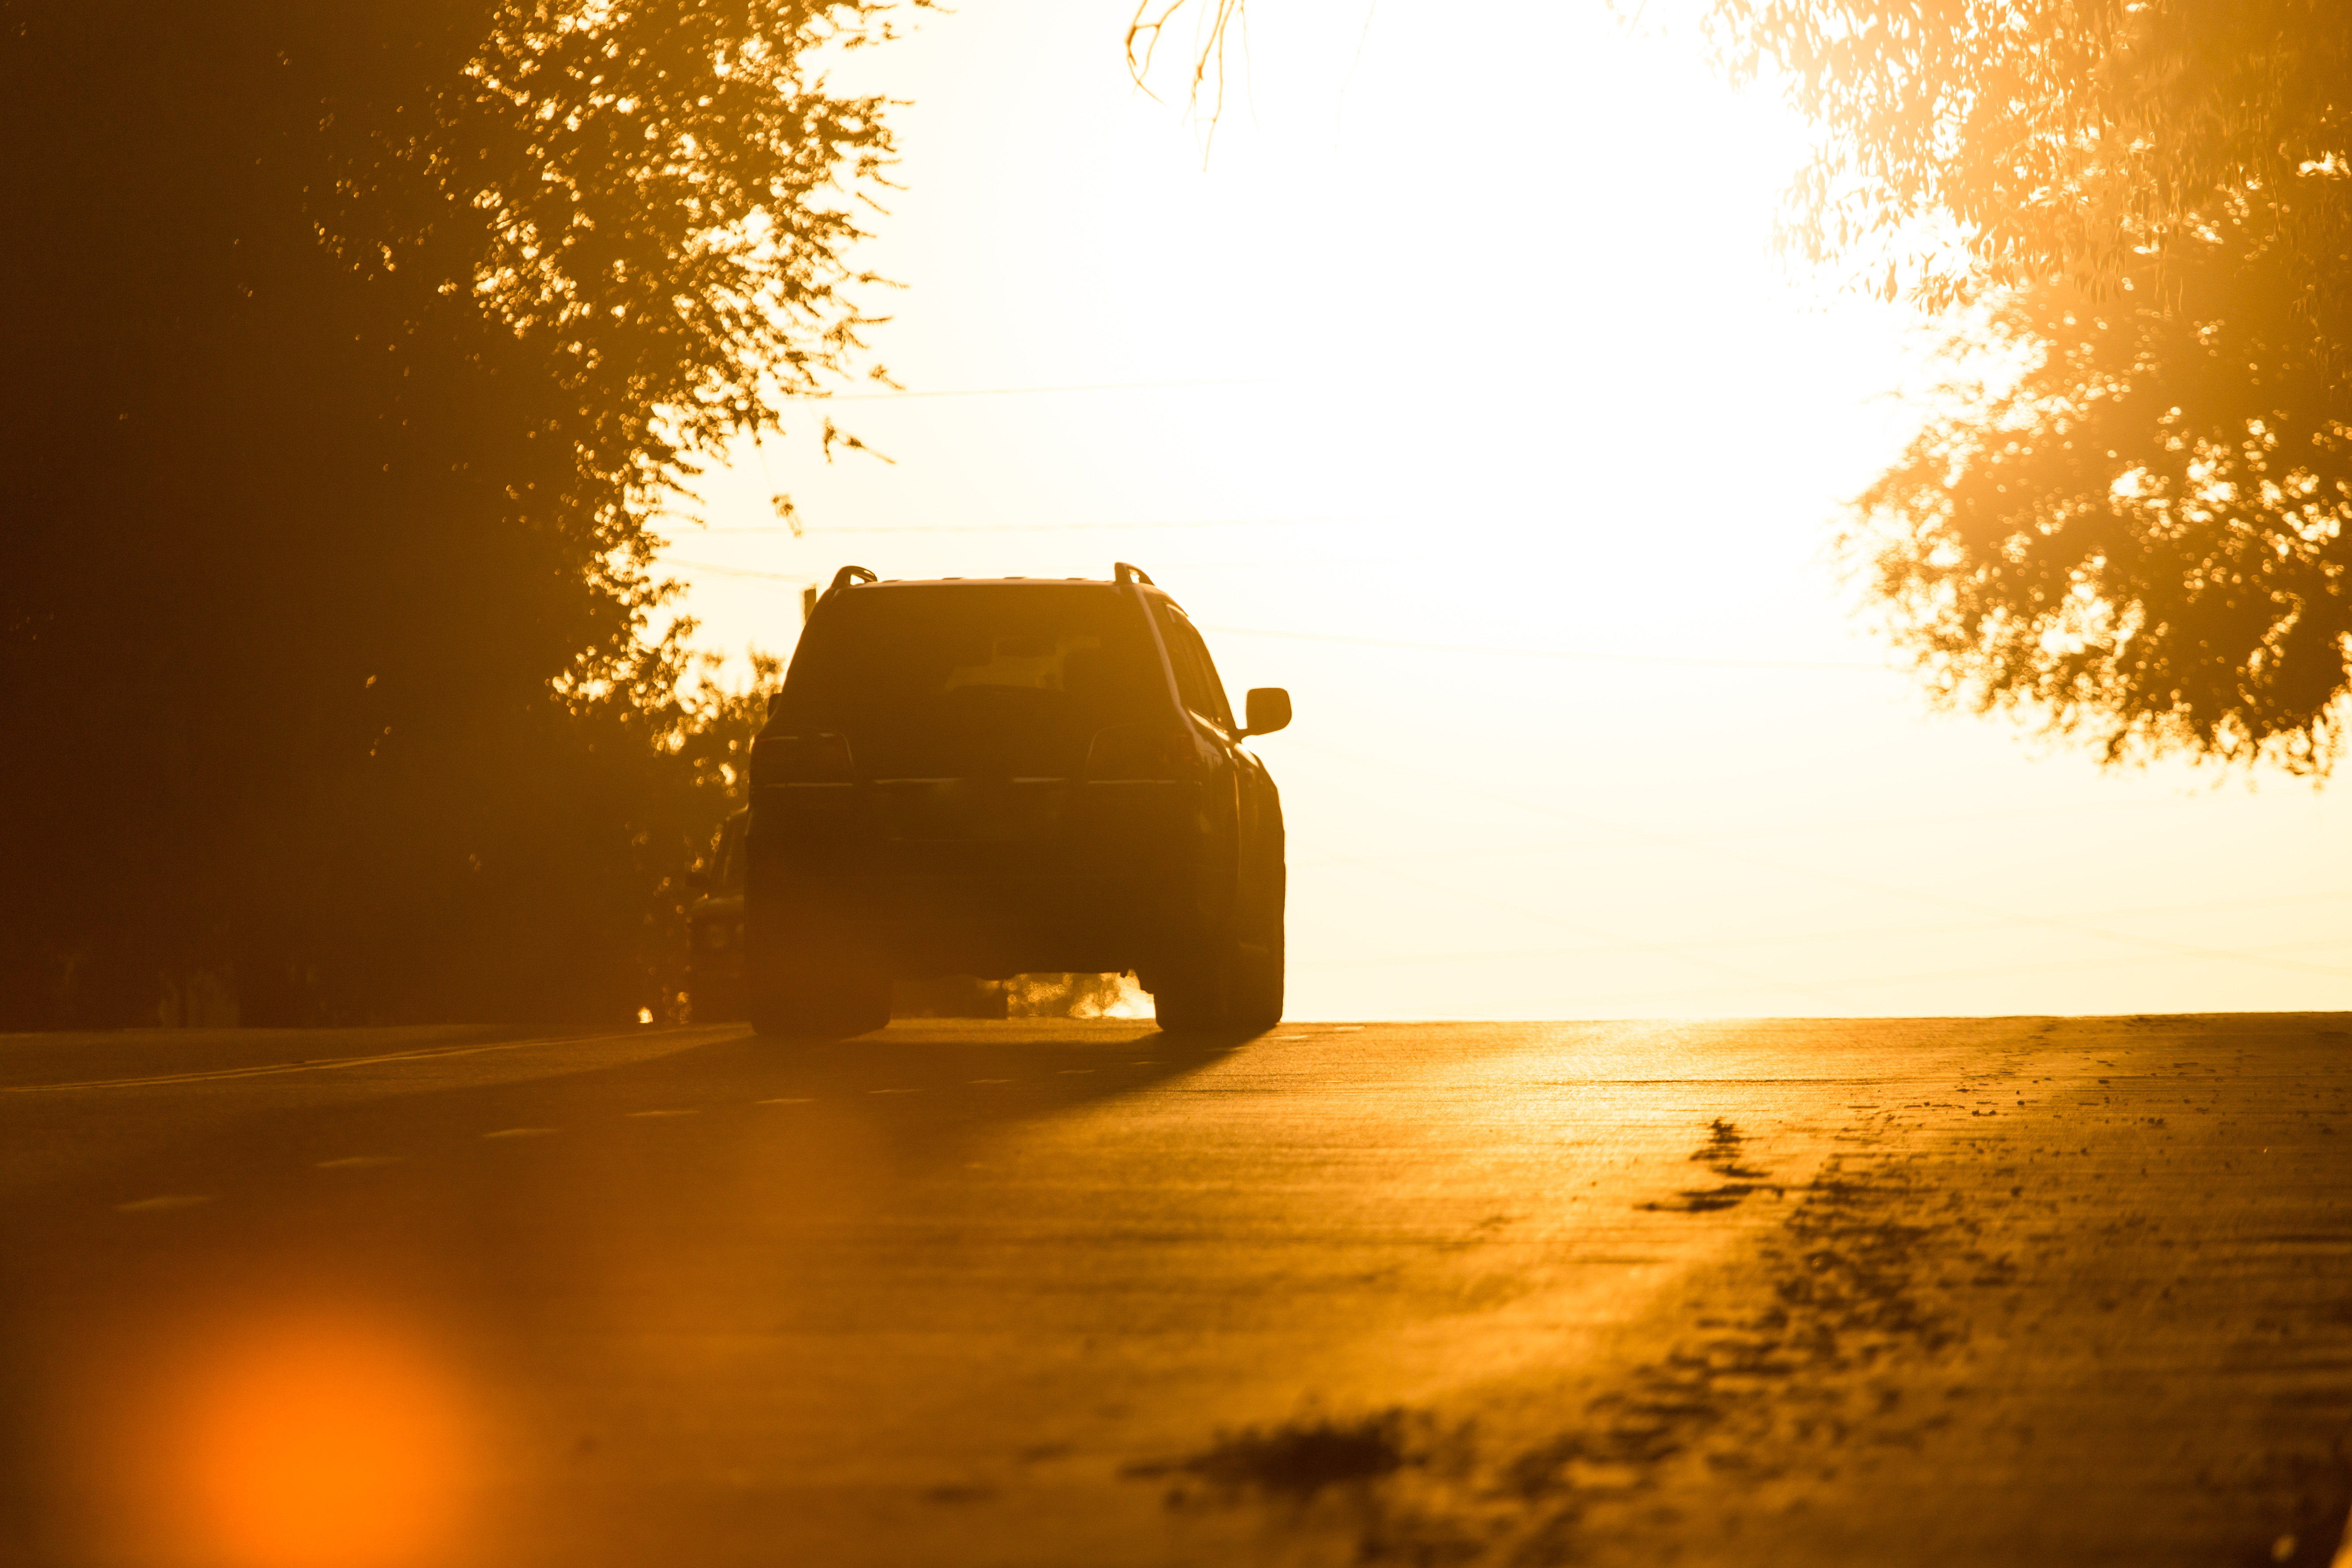 Une voiture au coucher du soleil | Source : Shutterstock